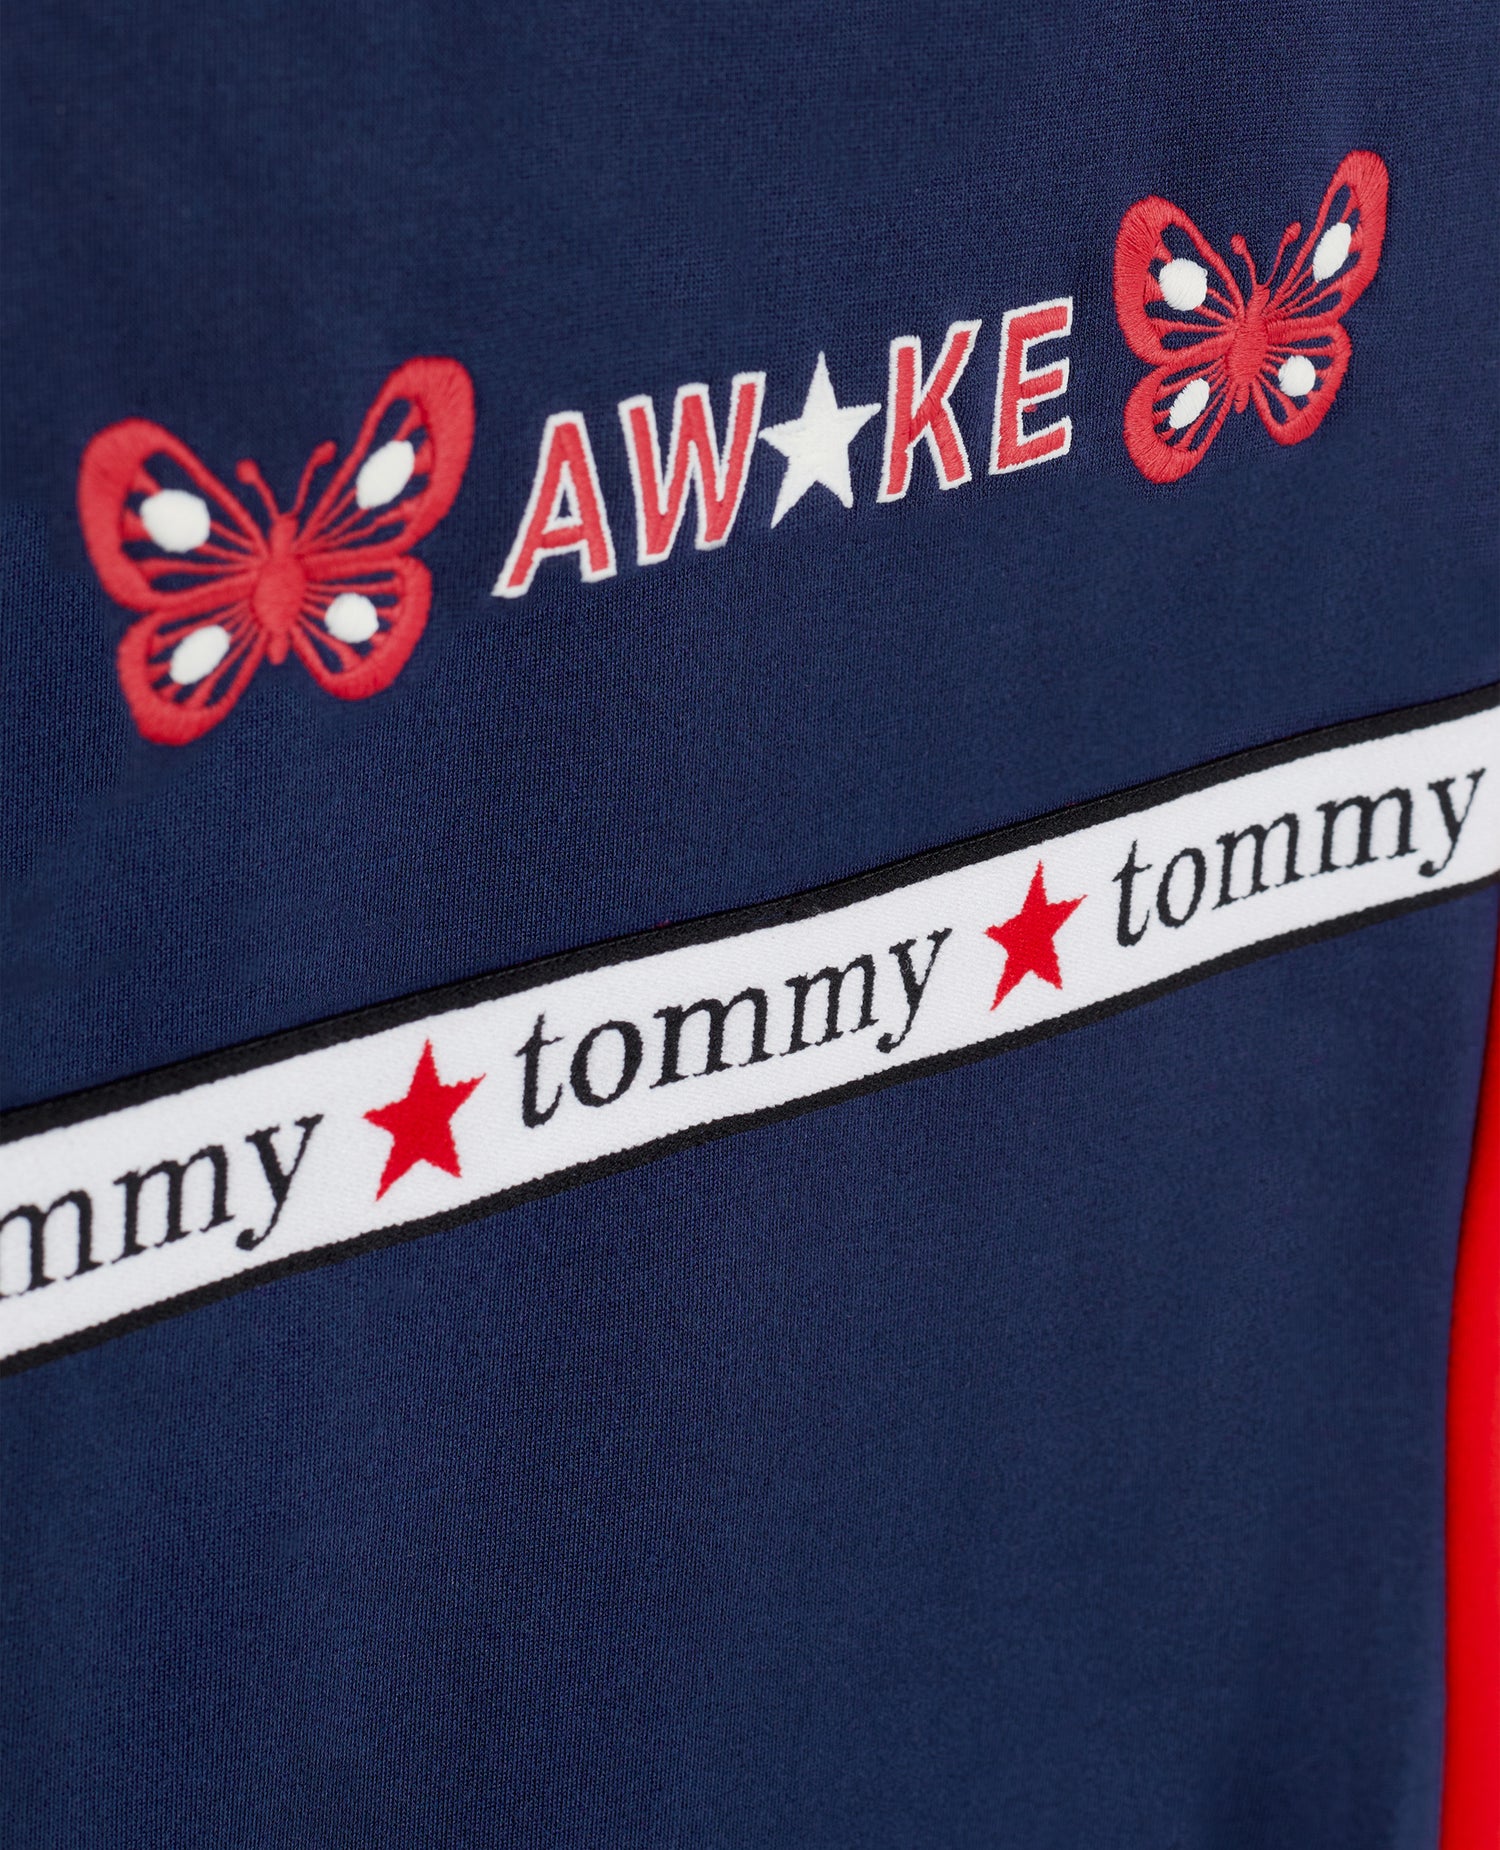 Robe Tommy X Awake (Yale Marine)